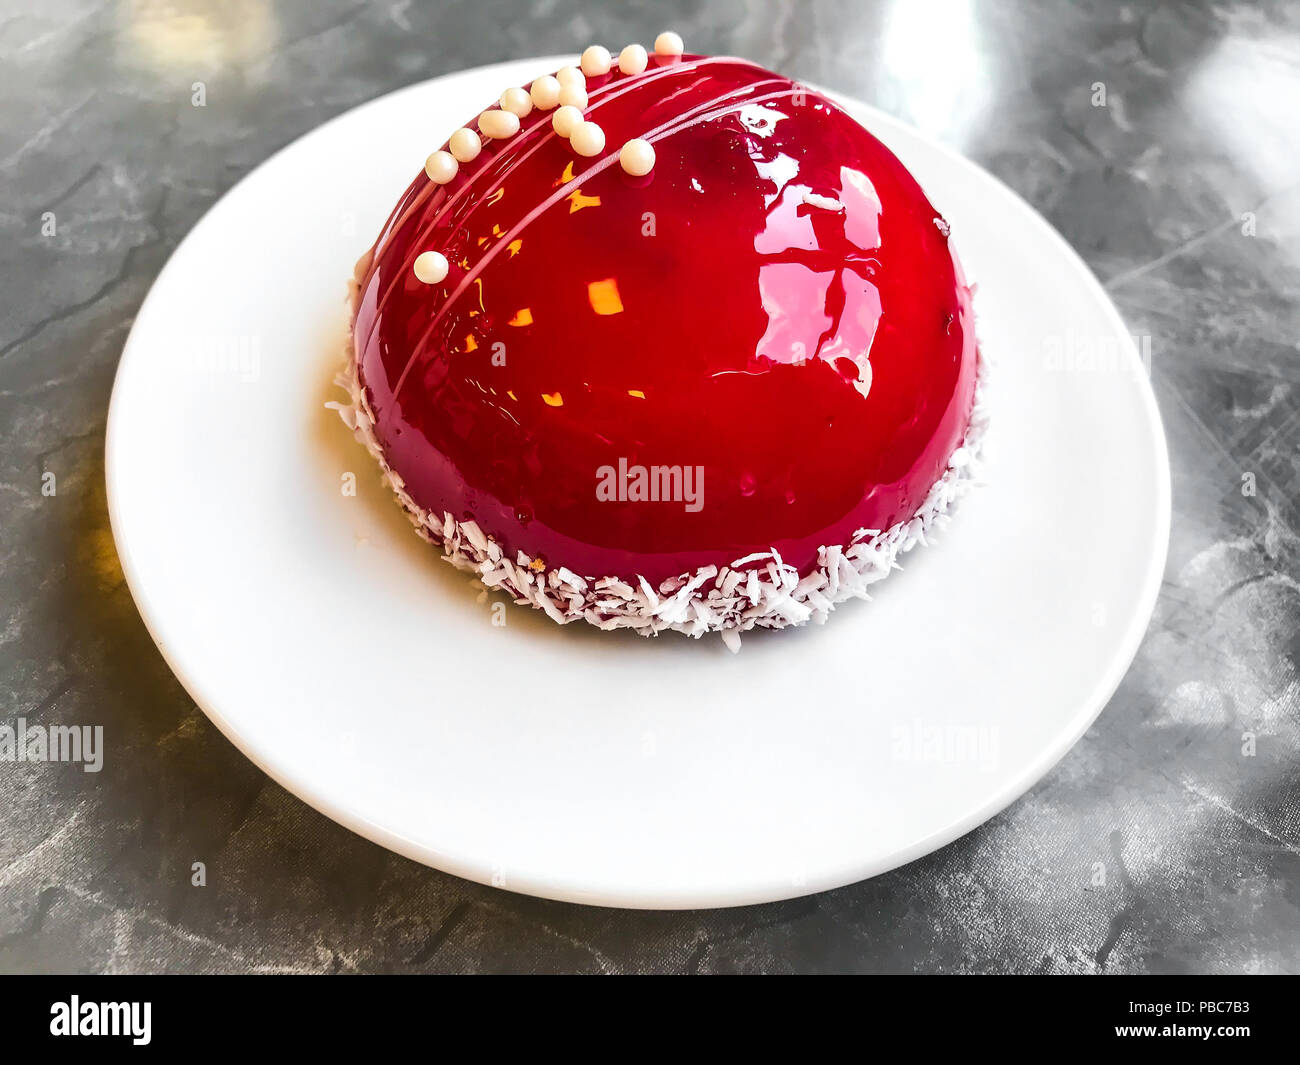 Mousse cake with red mirror glaze. Studio Photo Stock Photo